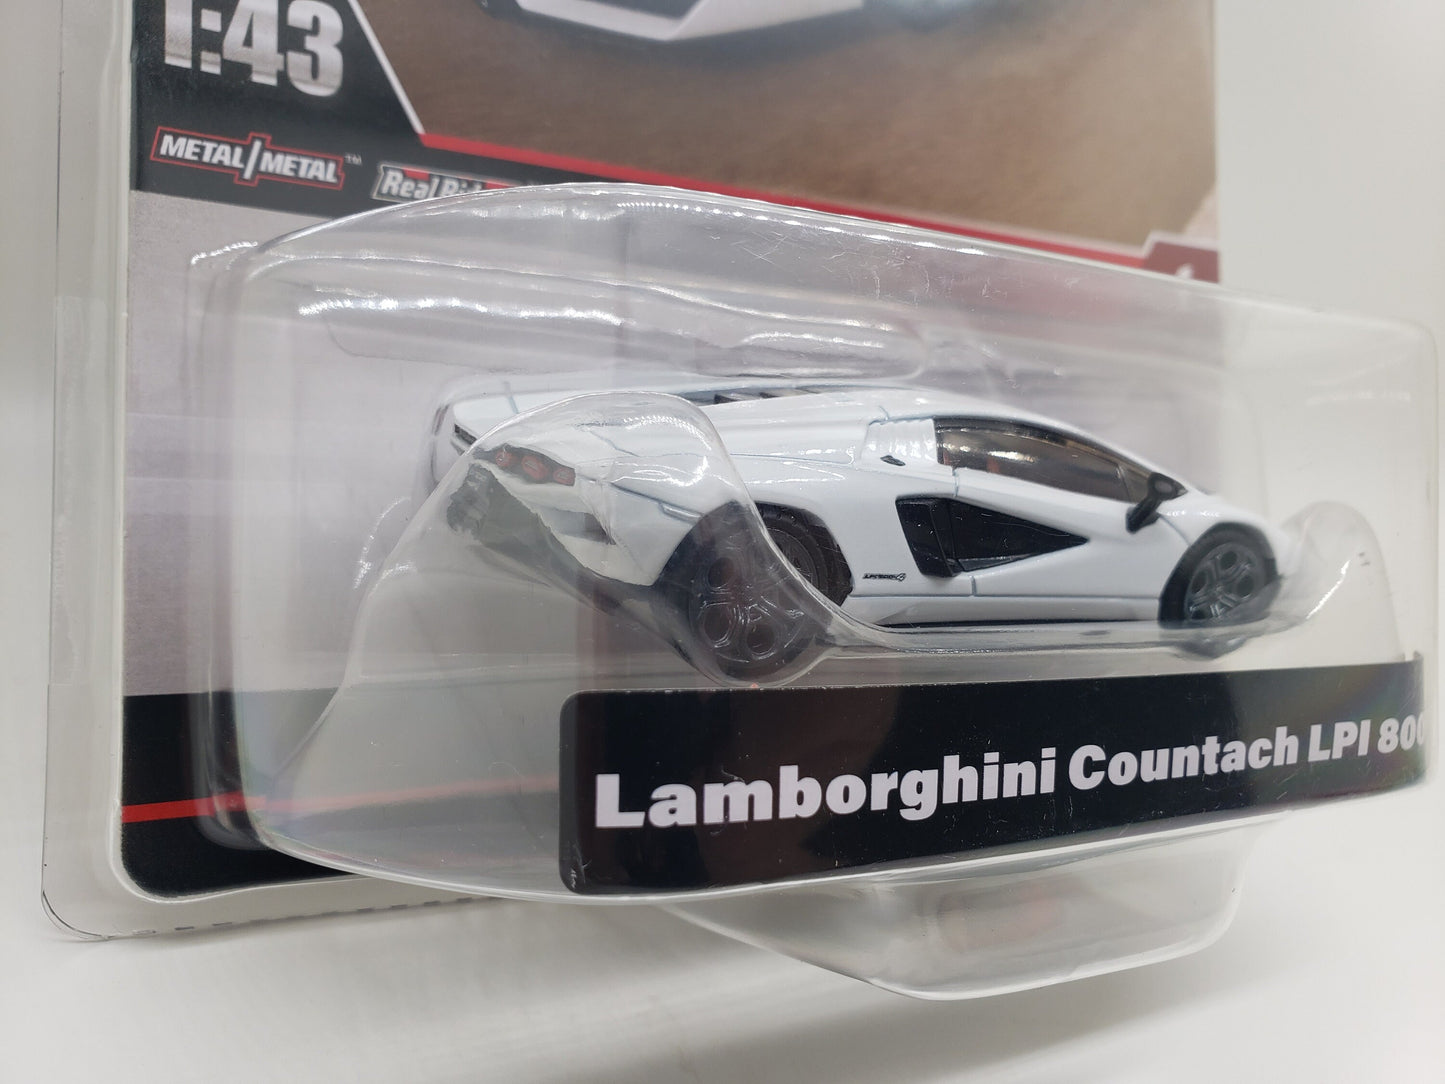 Hot Wheels Lamborghini Countach LPI 800-4 White Perfect Birthday Gift 143 Scale Model Toy Car